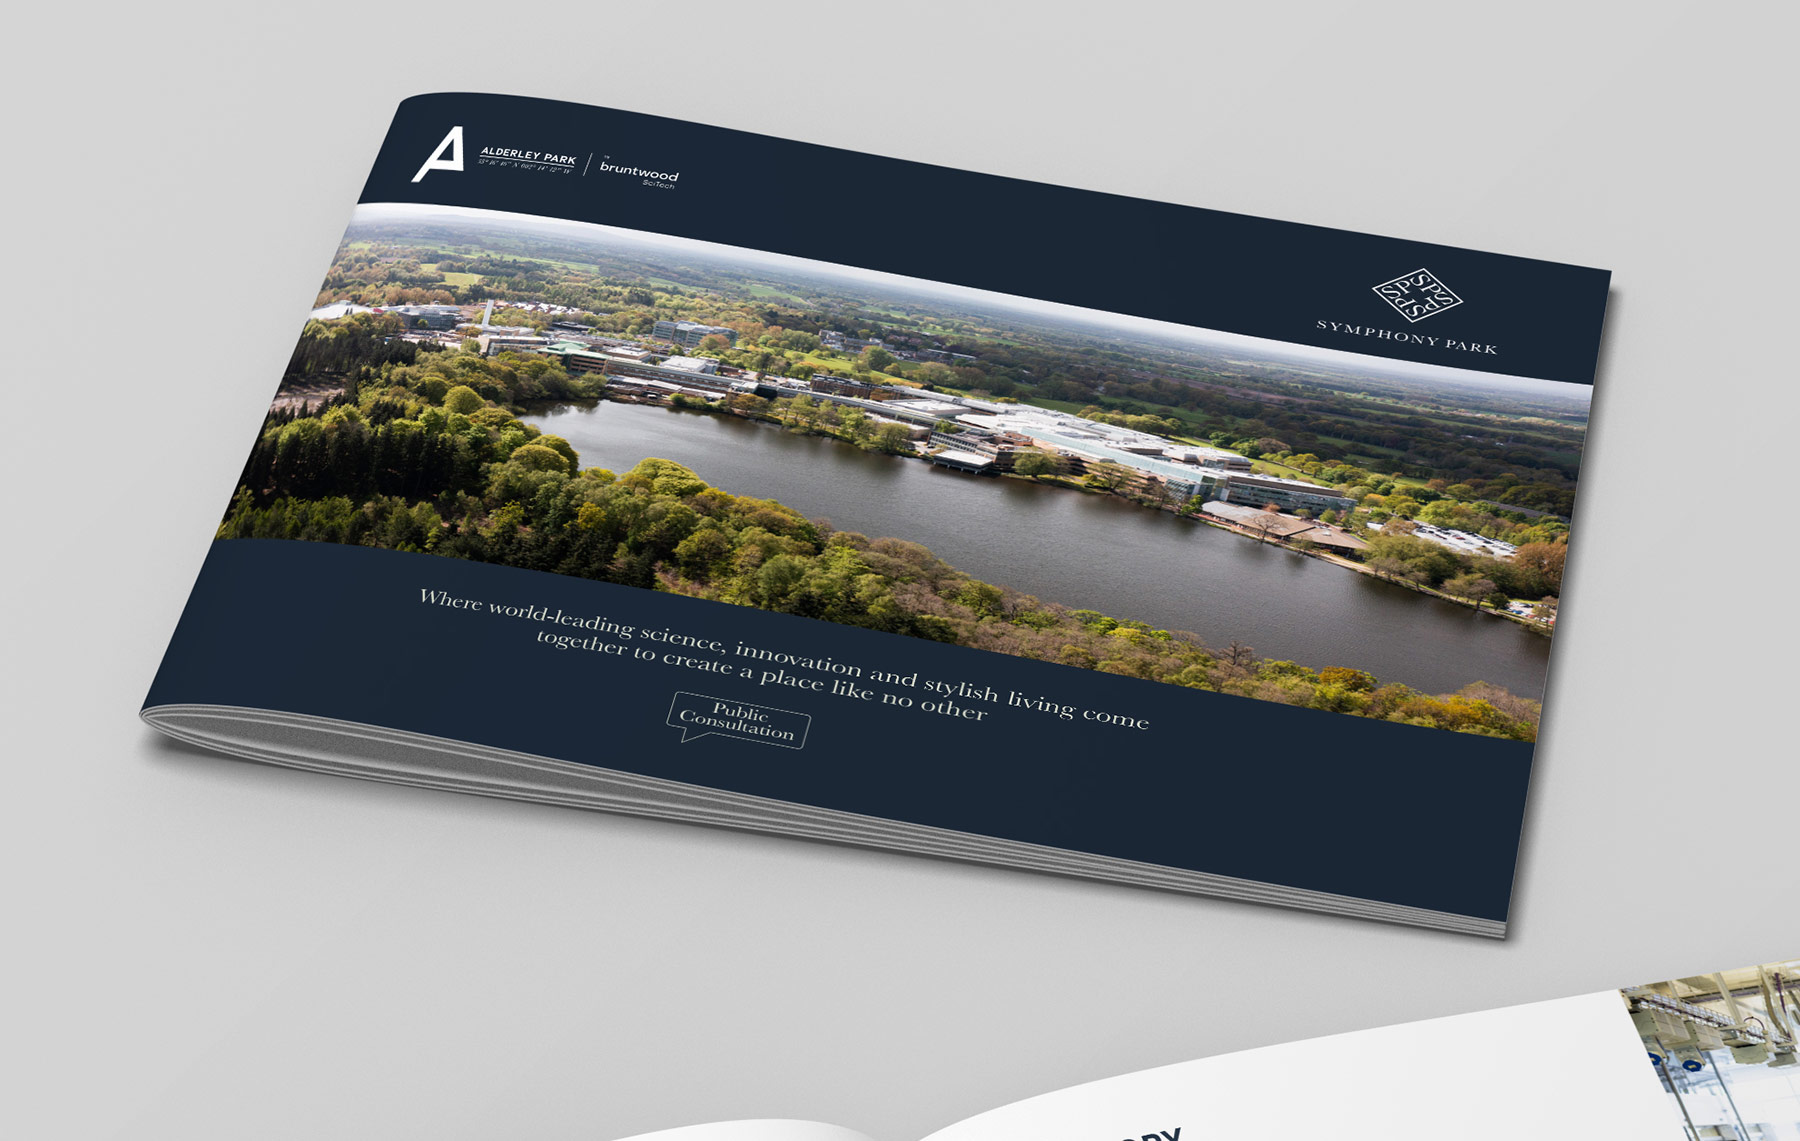 Alderley Park, Vision Document cover